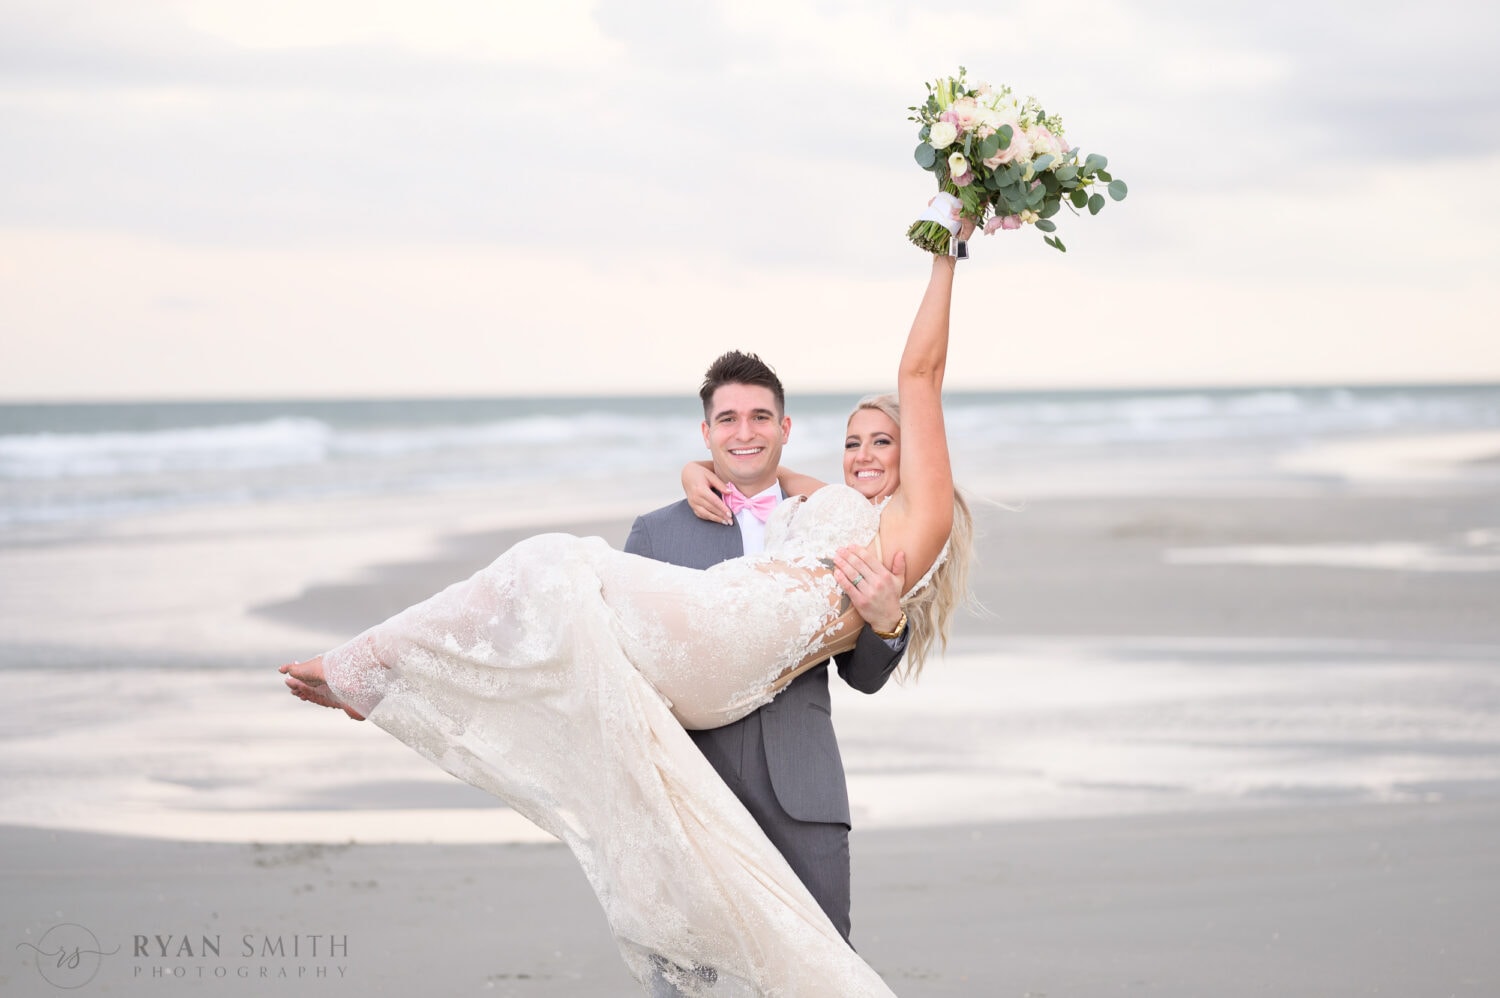 Lifting bride into the air - 21 Main Events at North Beach